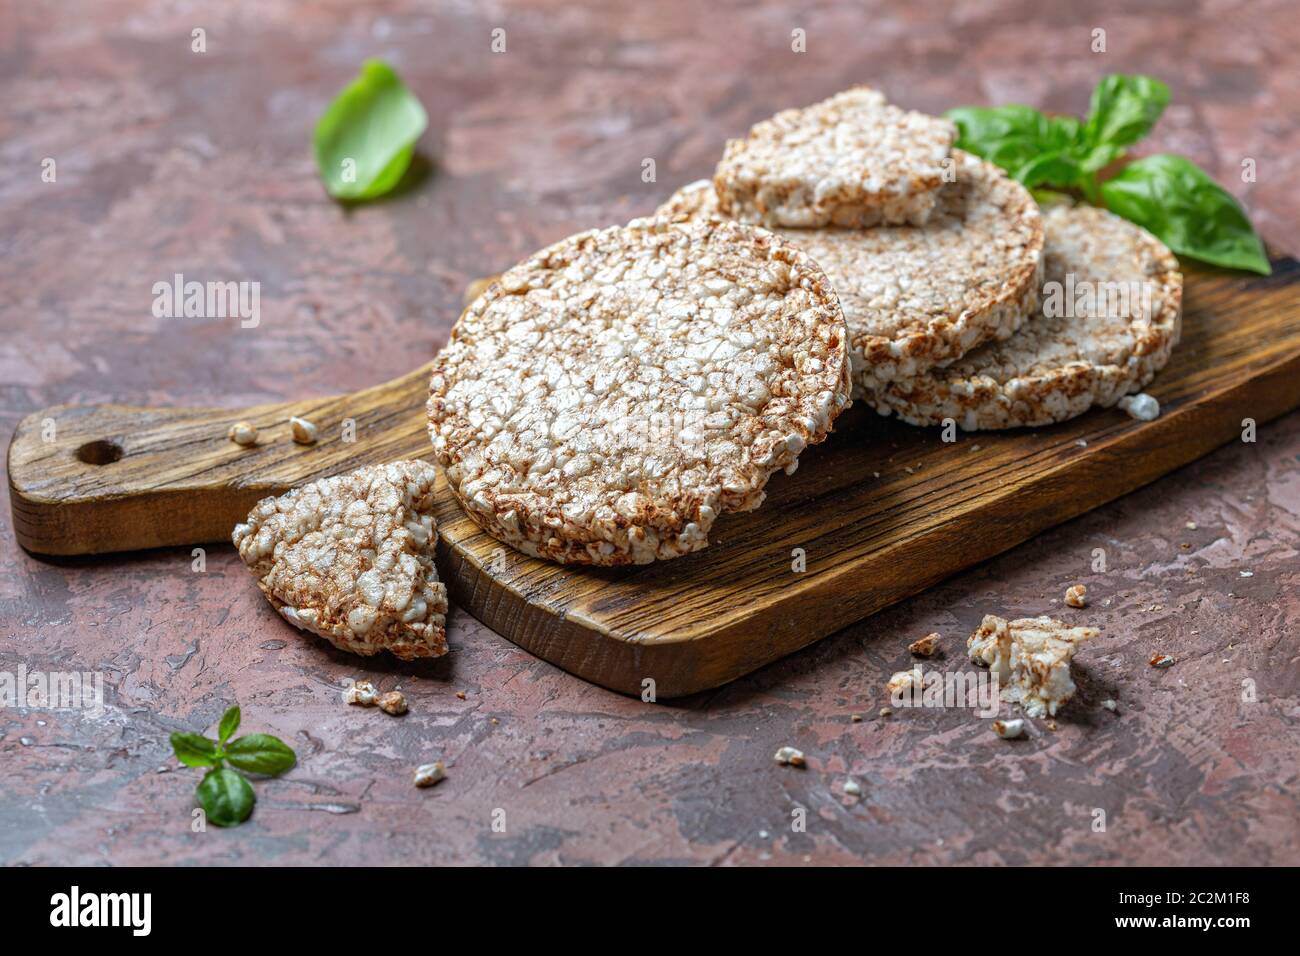 Puffed whole grain crispbread. Stock Photo